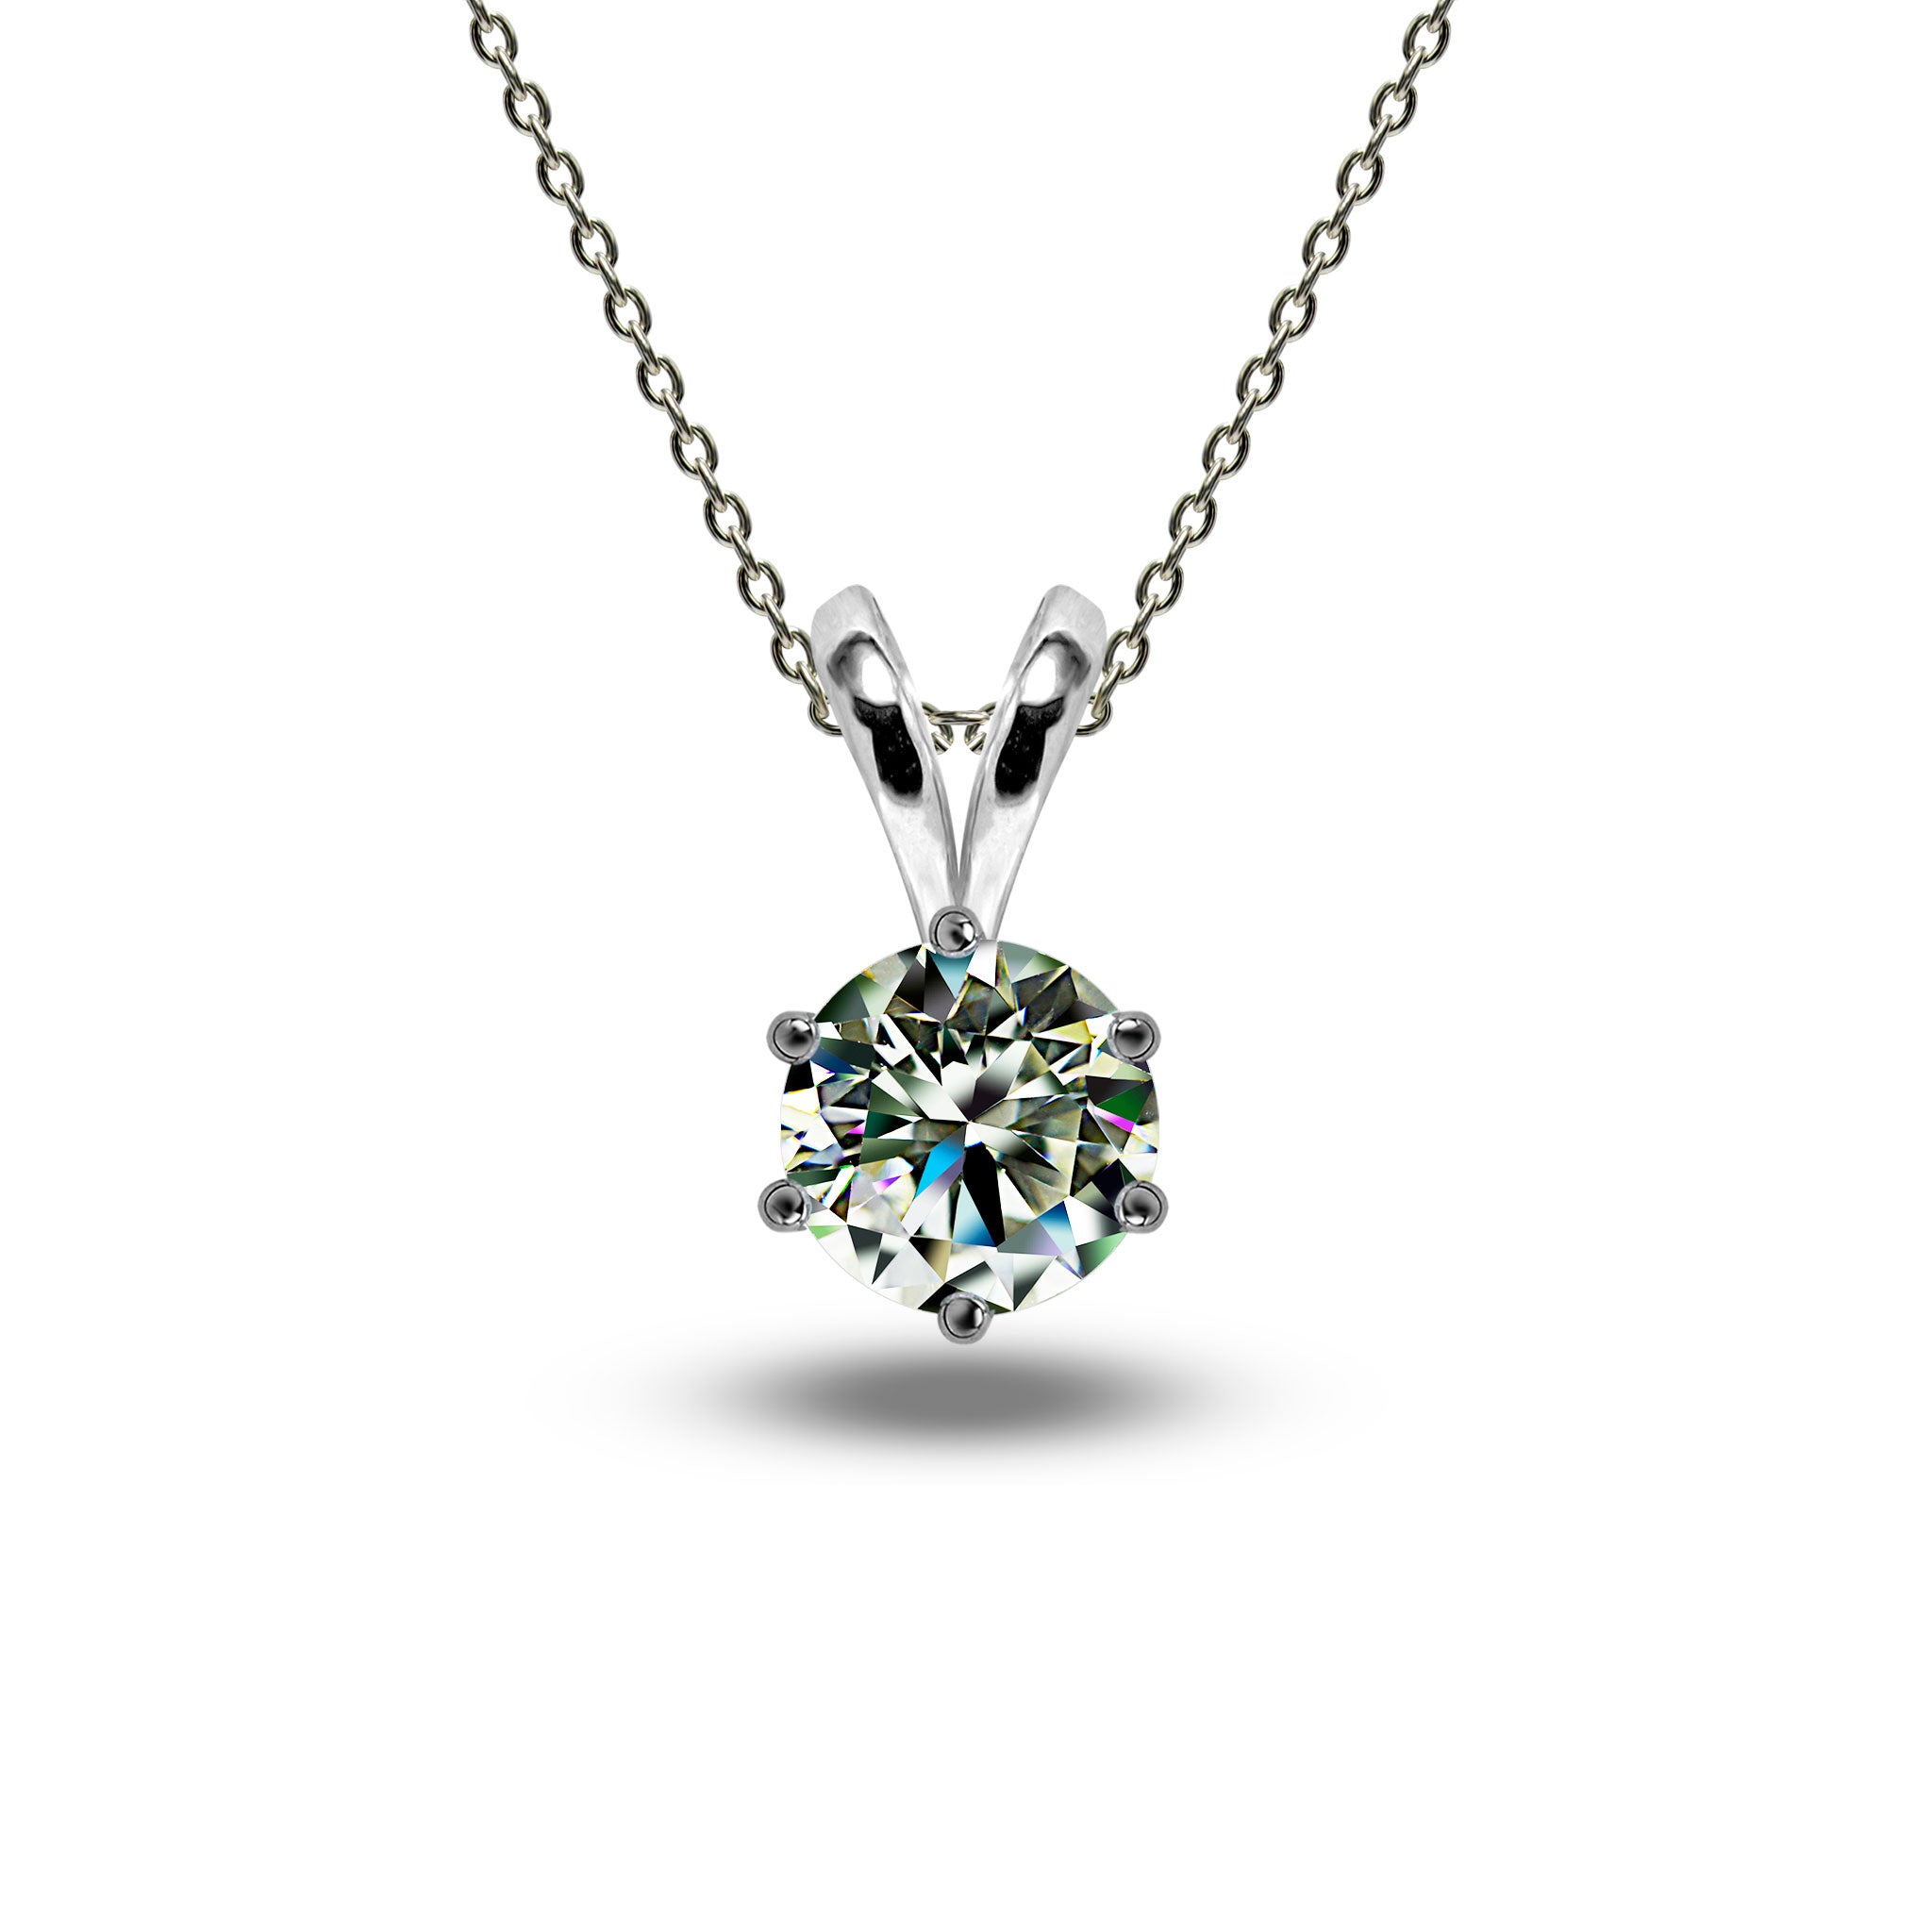 Diamond Tennis Necklace | 5 Carat Diamond Tennis Necklace